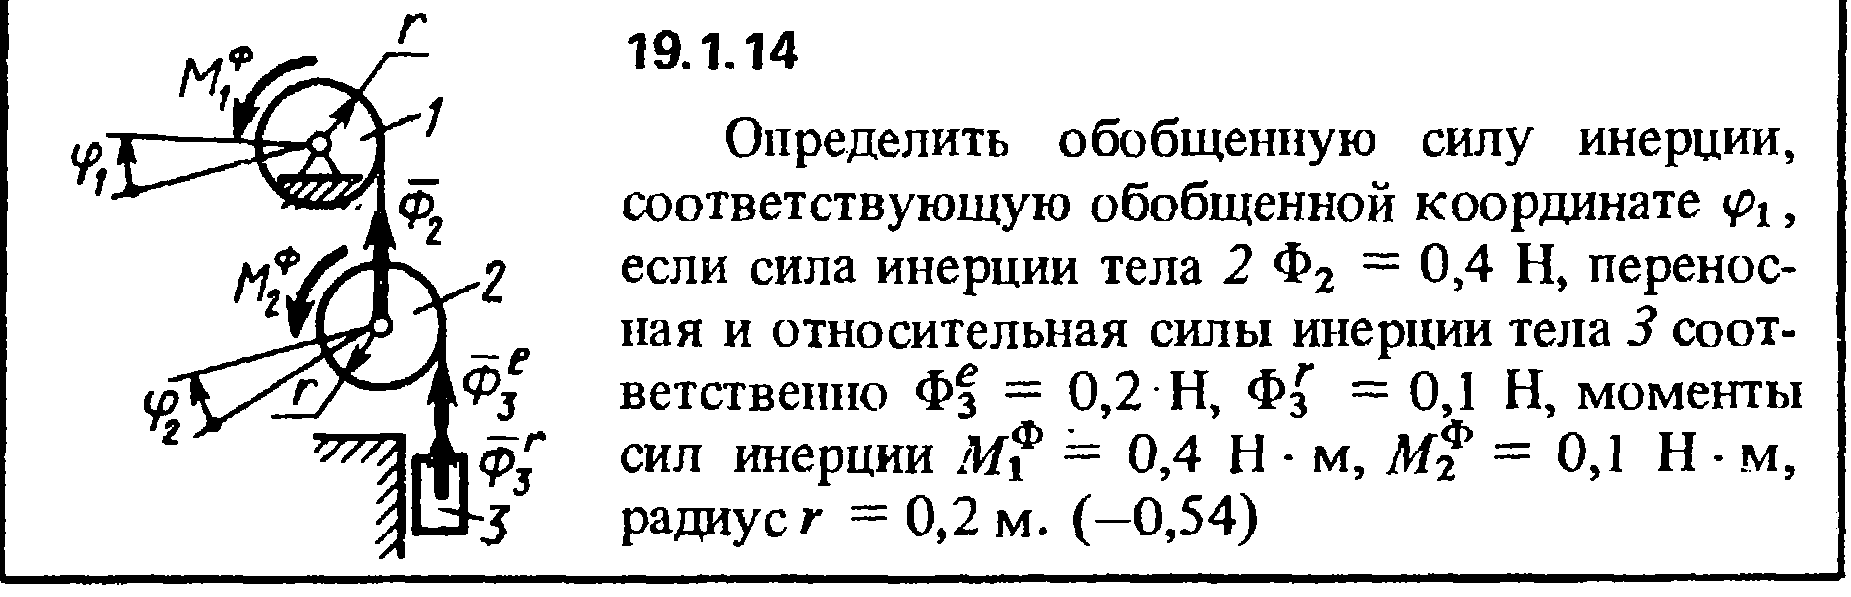 Решение 19.1.14 из сборника (решебника) Кепе О.Е. 1989